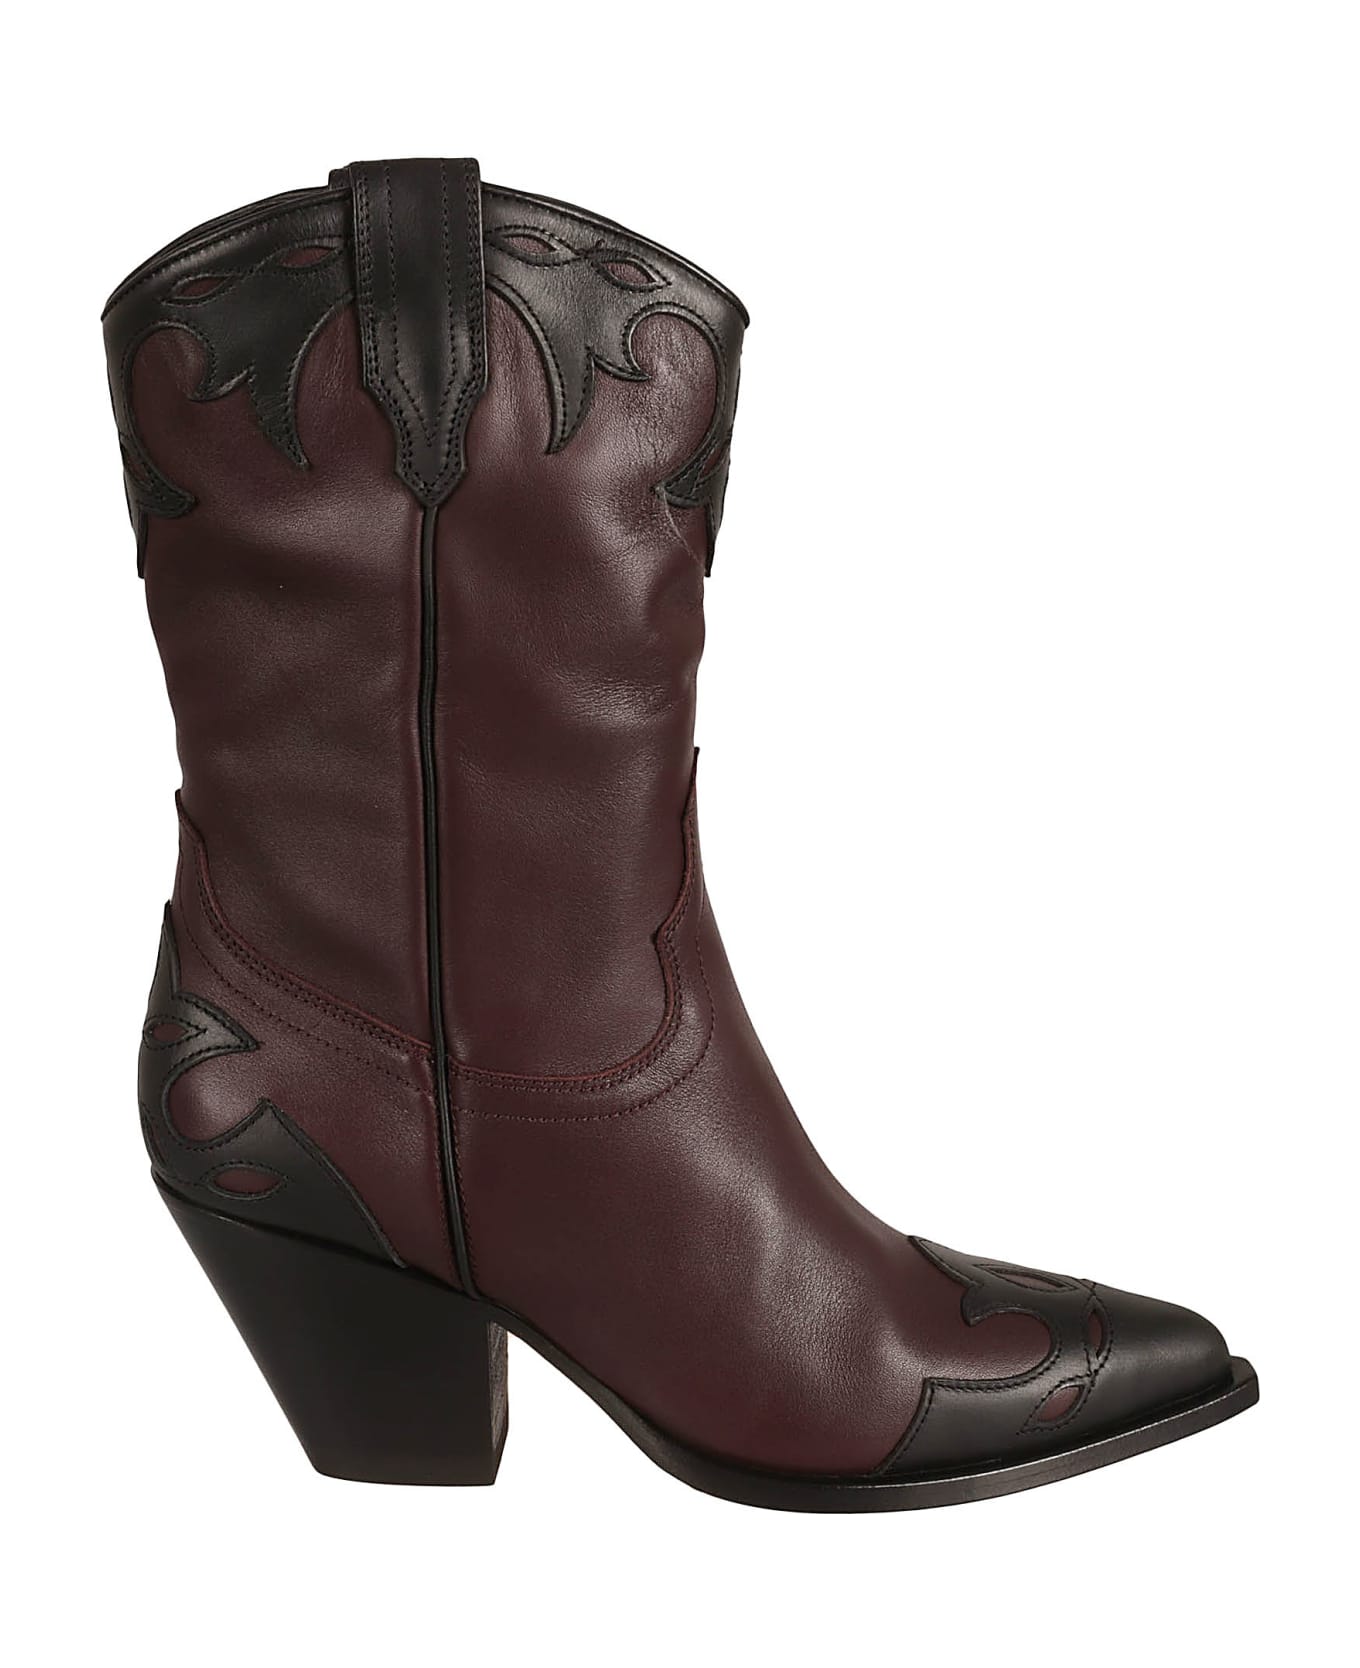 Sonora Nappa Knee Boots - Brown/Black ブーツ